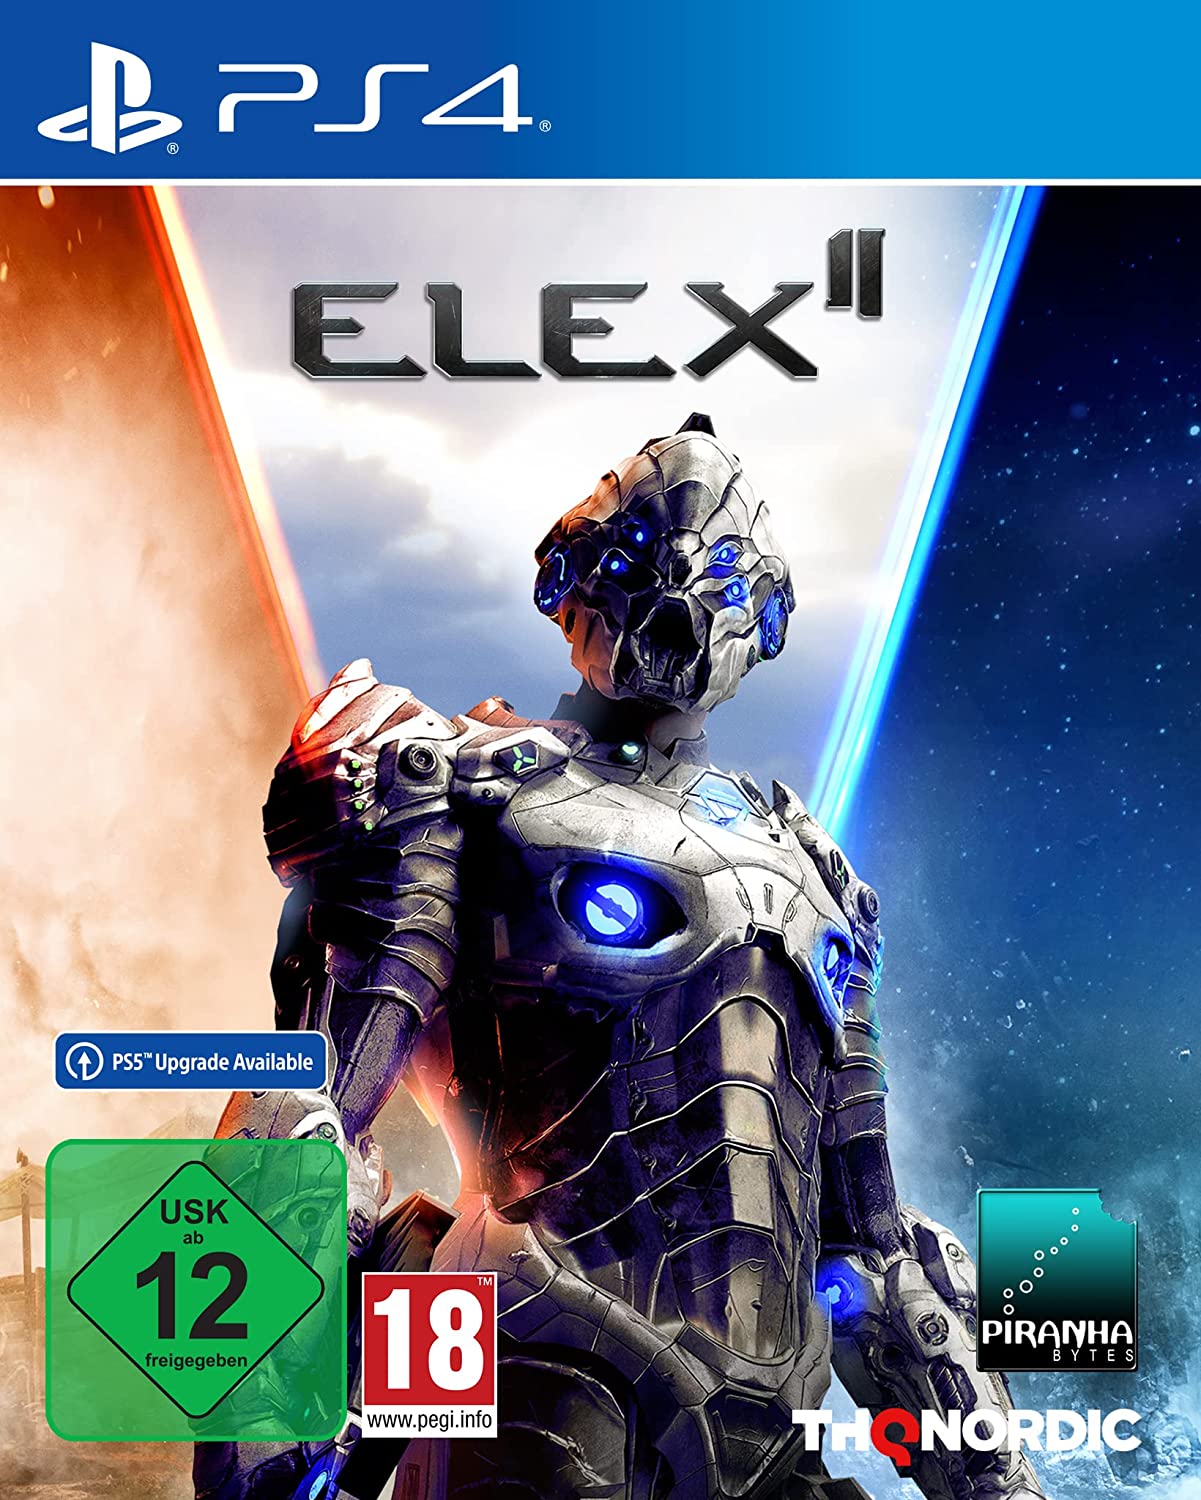 Elex 2 PS4